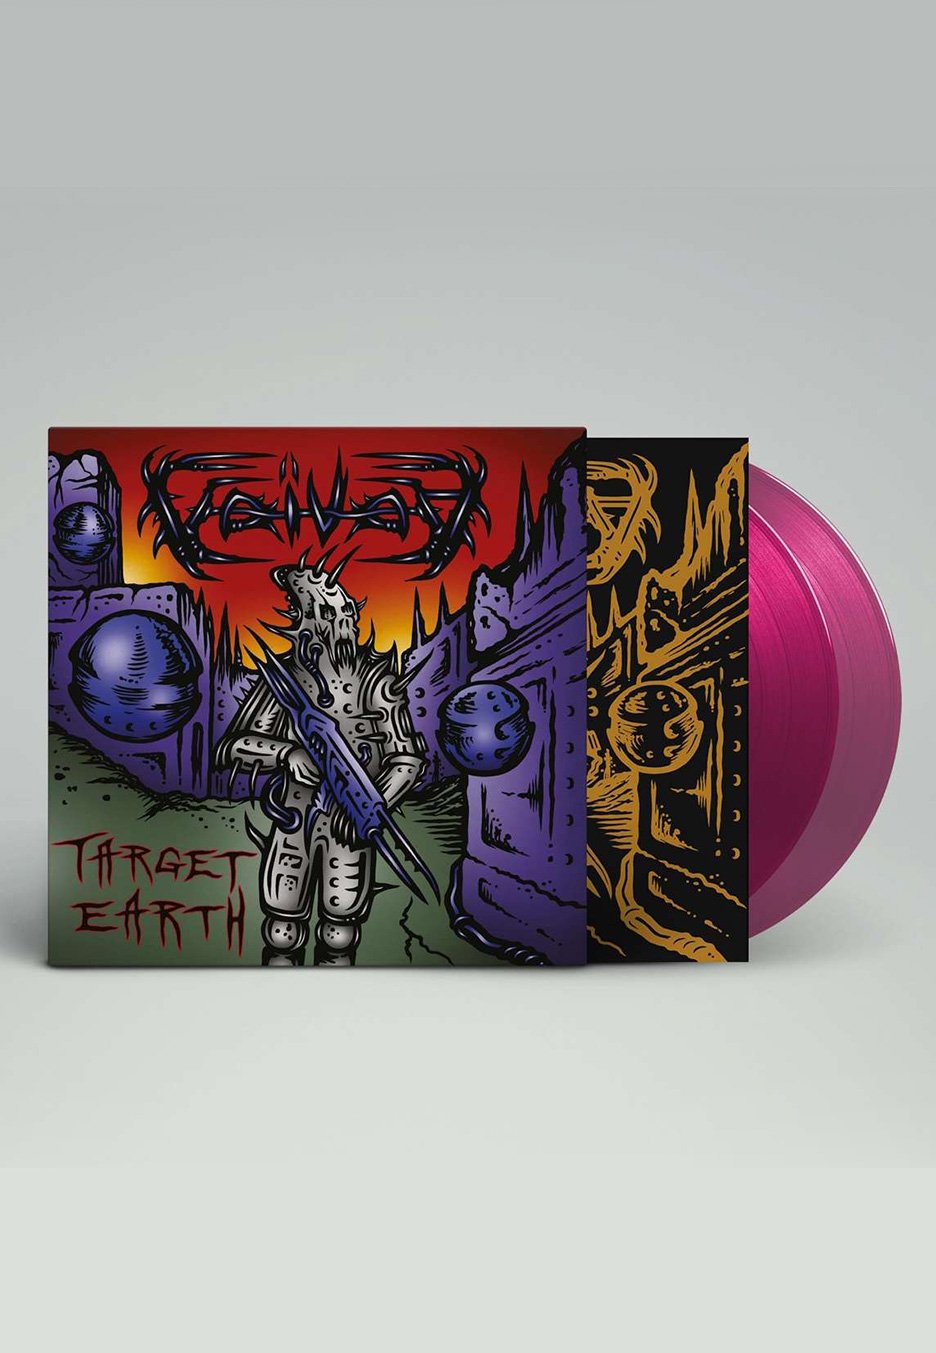 Voivod - Target Earth Ltd. Magenta - Colored 2 Vinyl